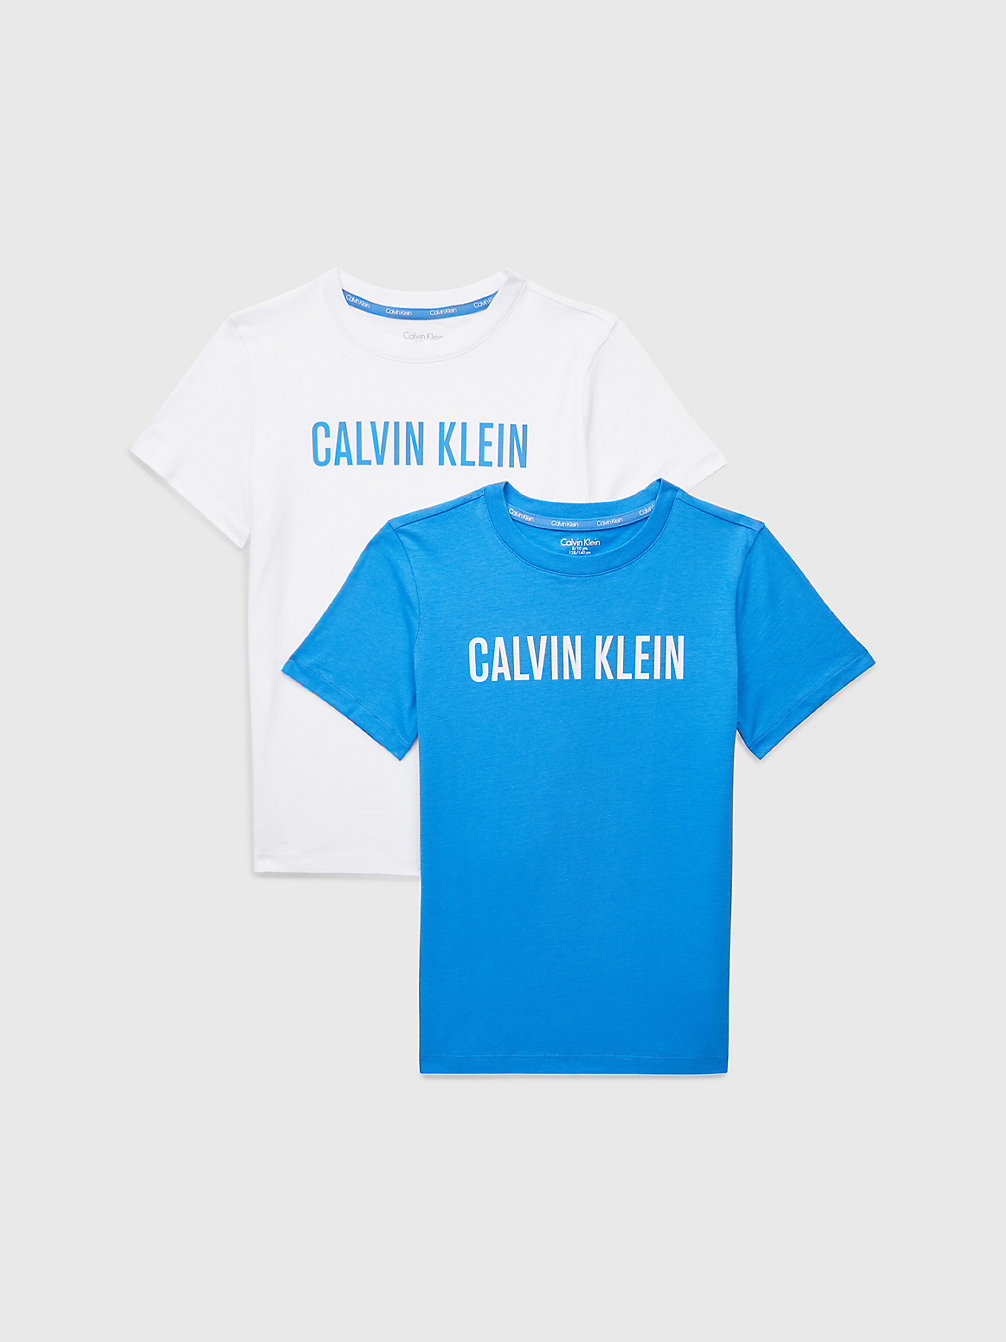 ELECTRICAQUA/PVHWHITE 2er-Pack Jungen-T-Shirts – Intense Power undefined boys Calvin Klein